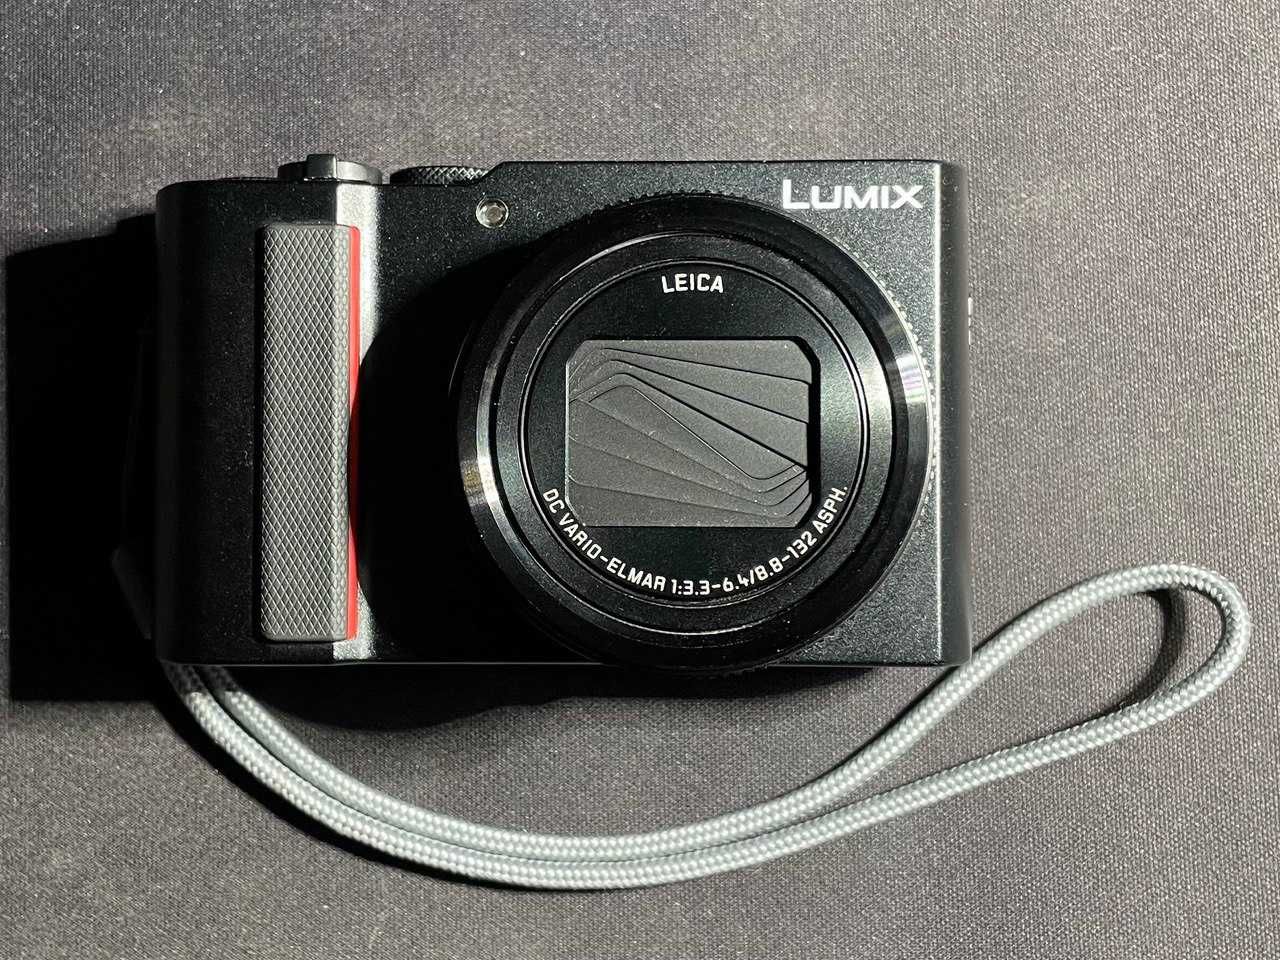 Panasonic Lumix DC-TZ200